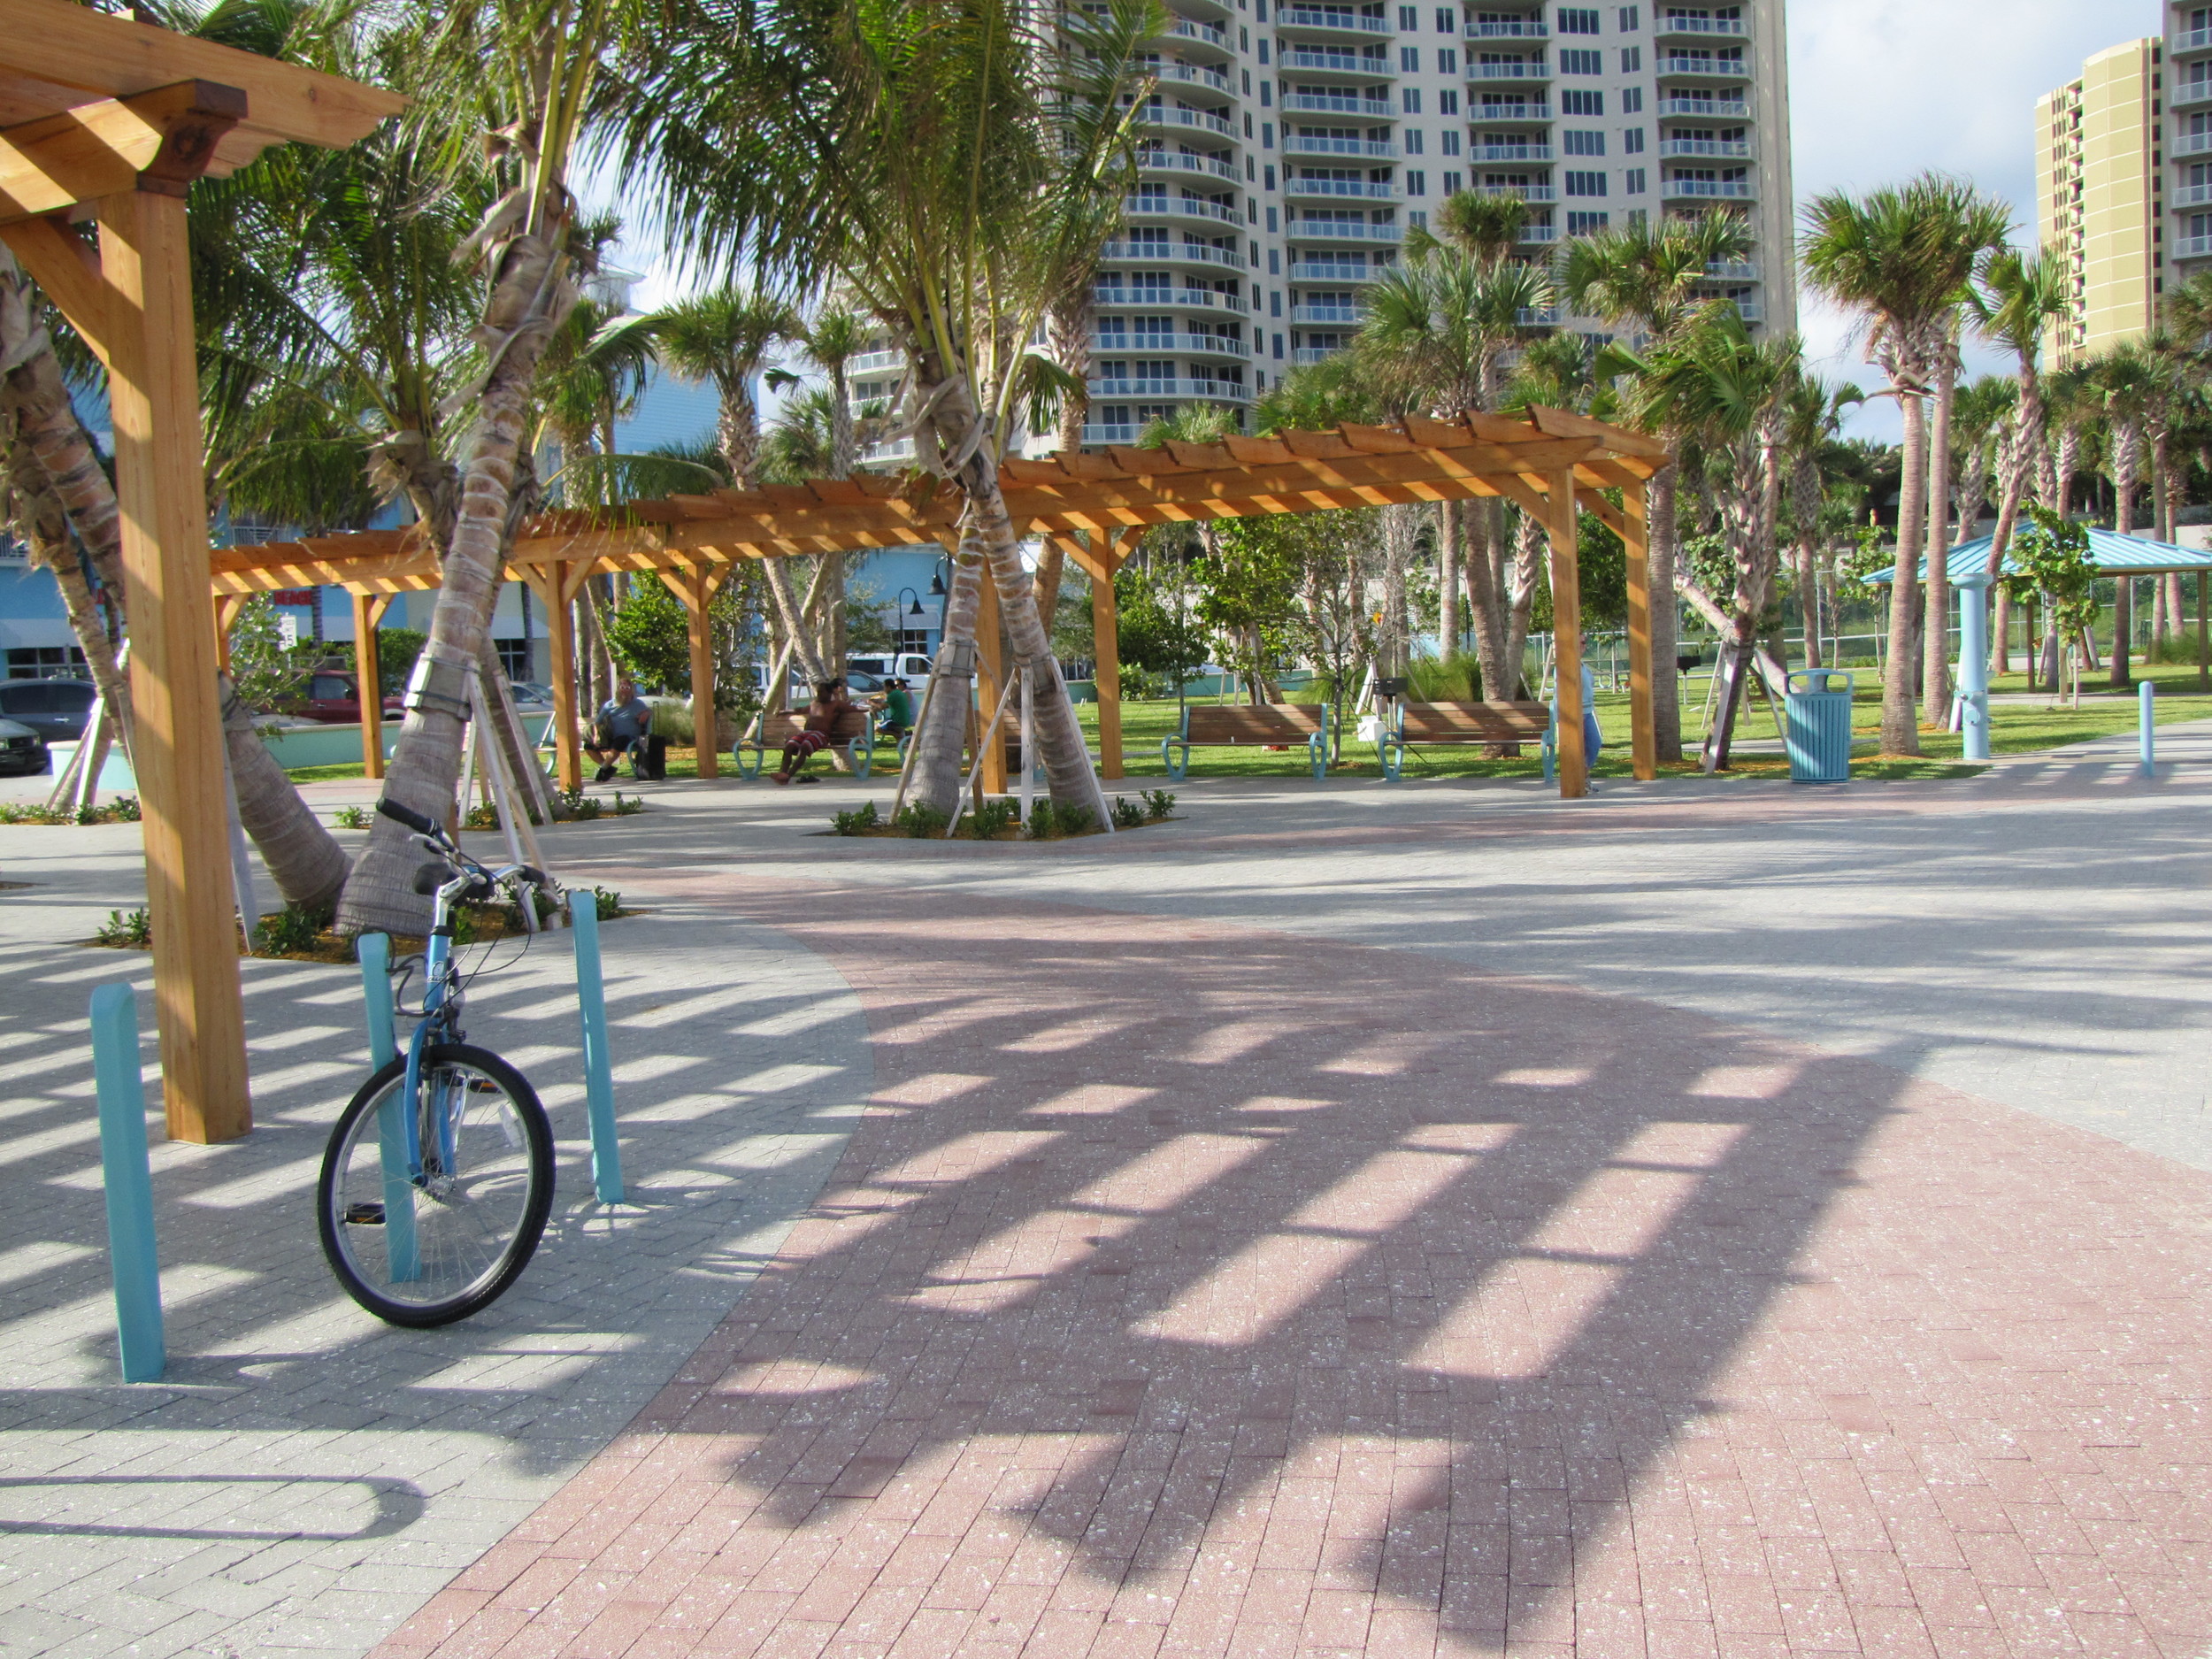 City of Riviera Beach Municipal Beach Park Ocean Mall Trellis and Bike Colored Concrete Pavers.jpg